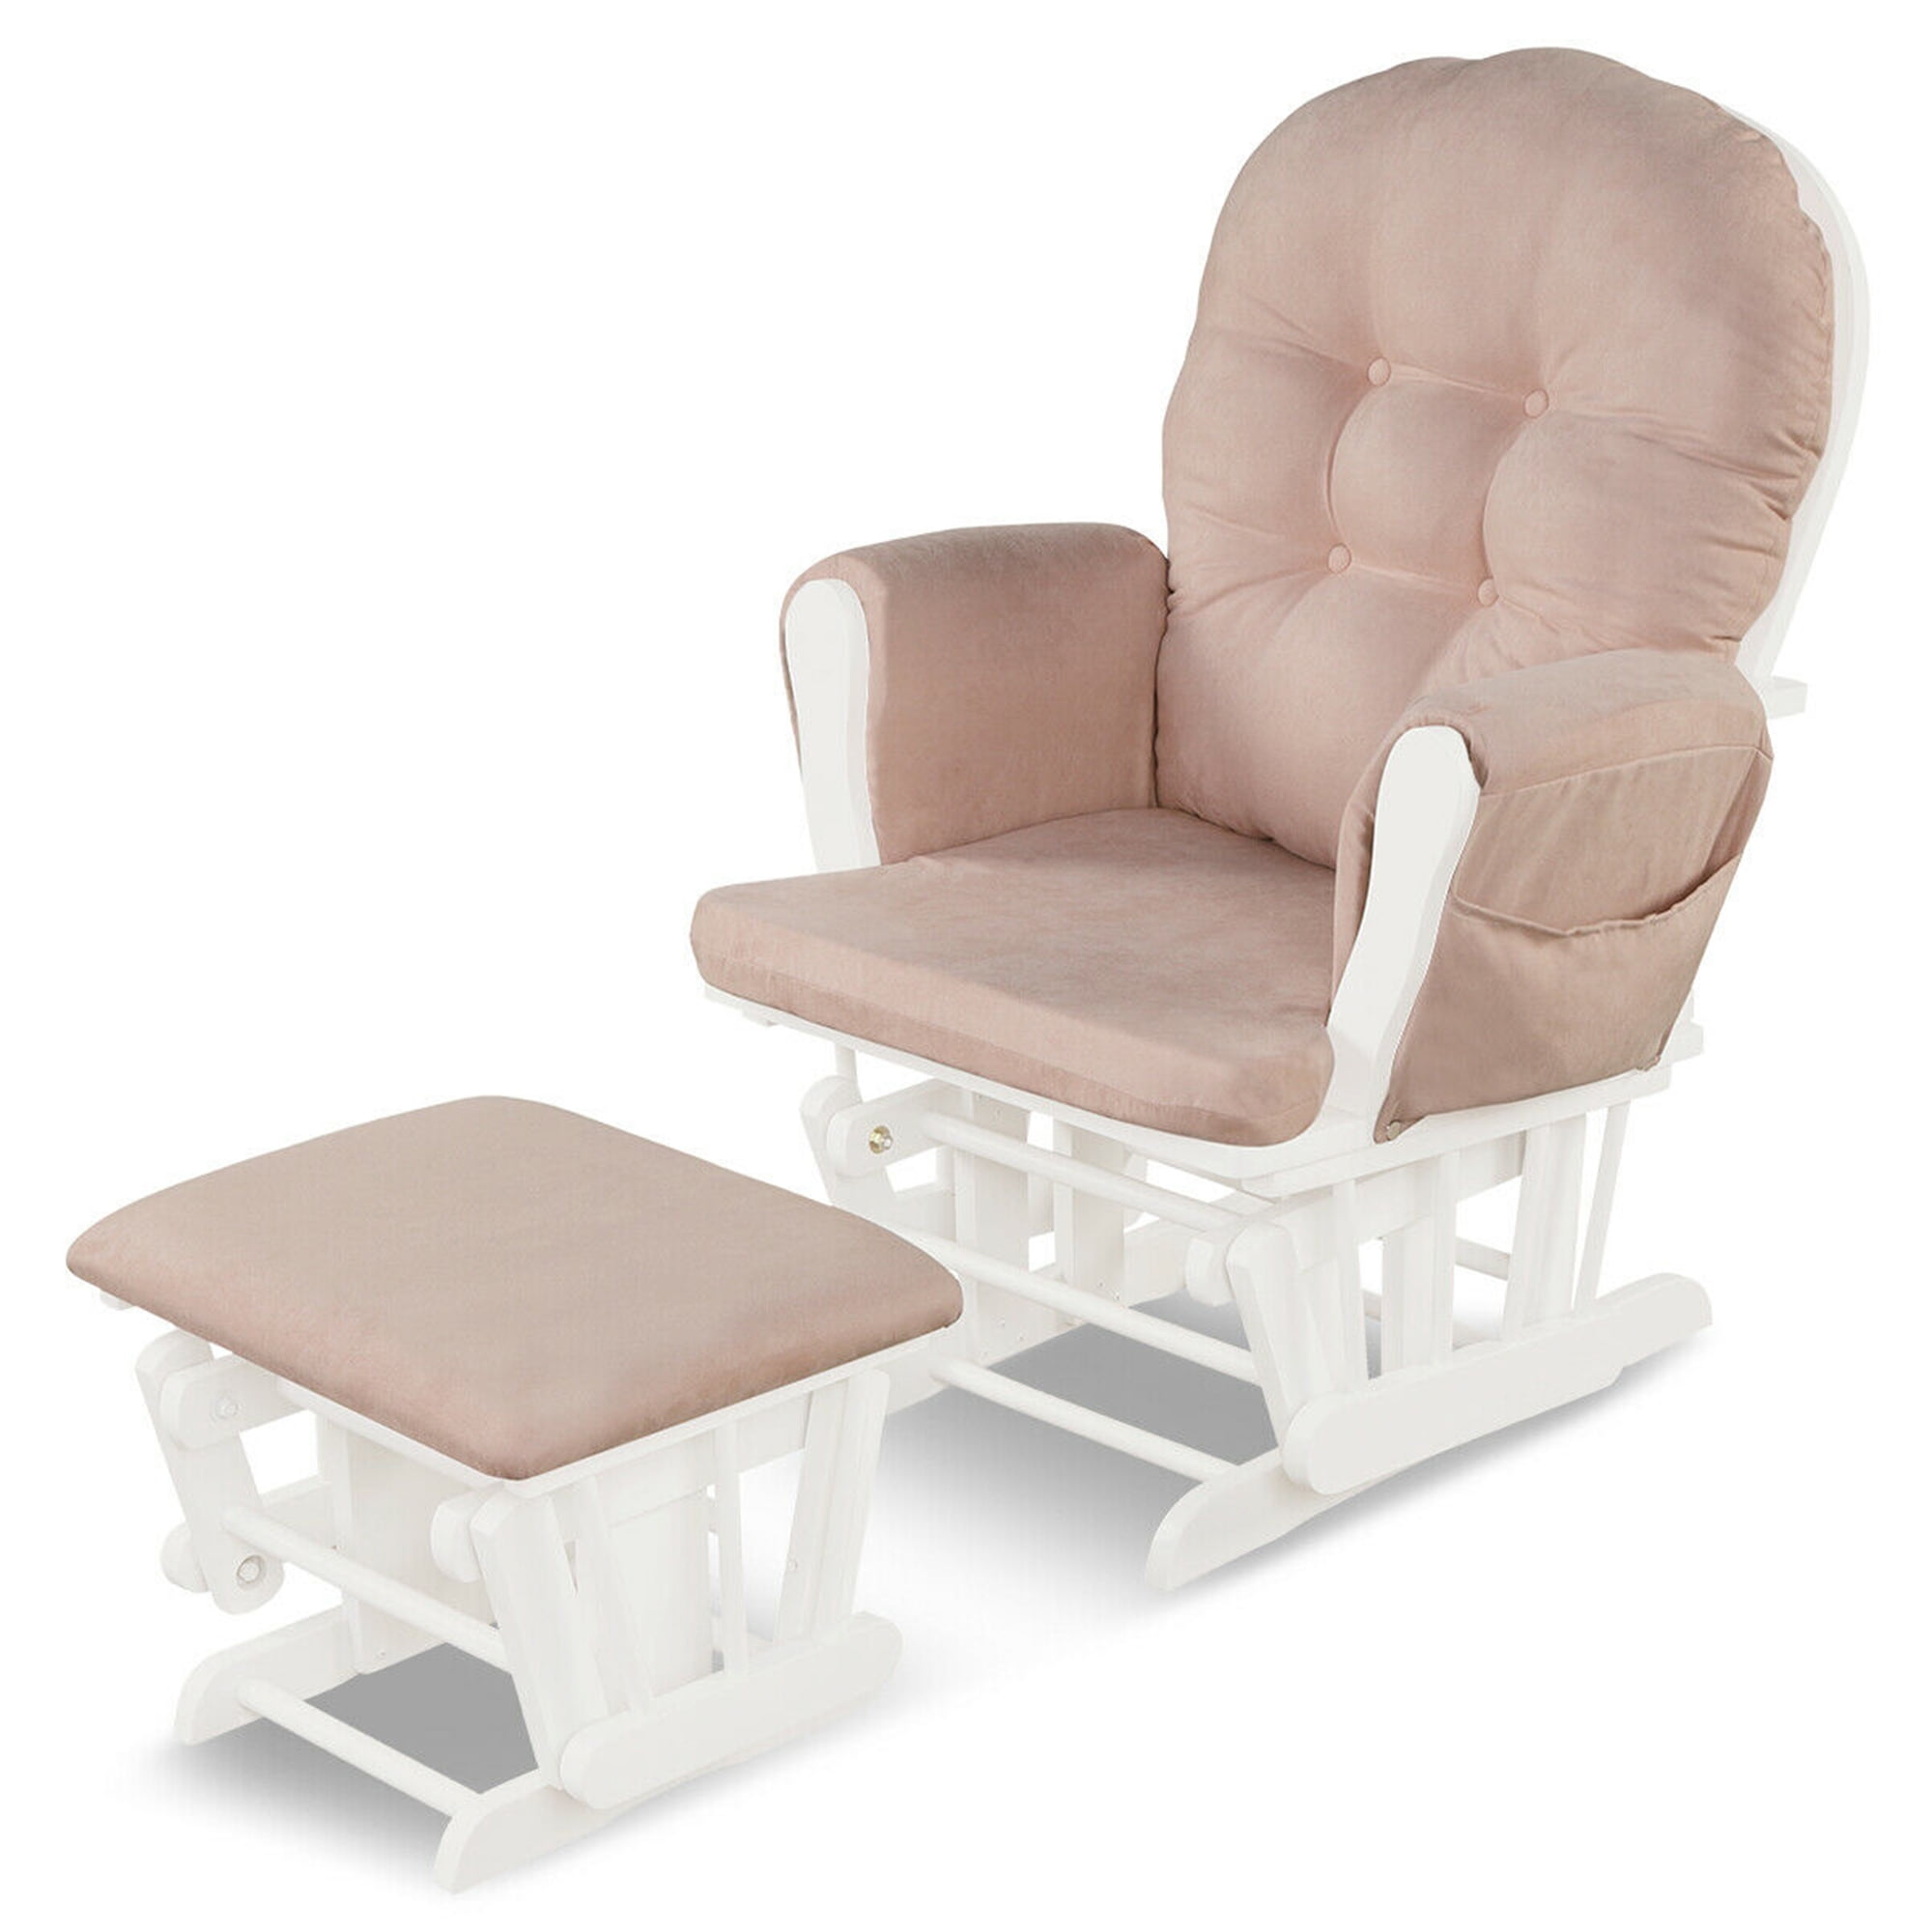 Baby Nursery Relax Rocker Rocking Chair Glider & Ottoman Set-Pink Pink Color 